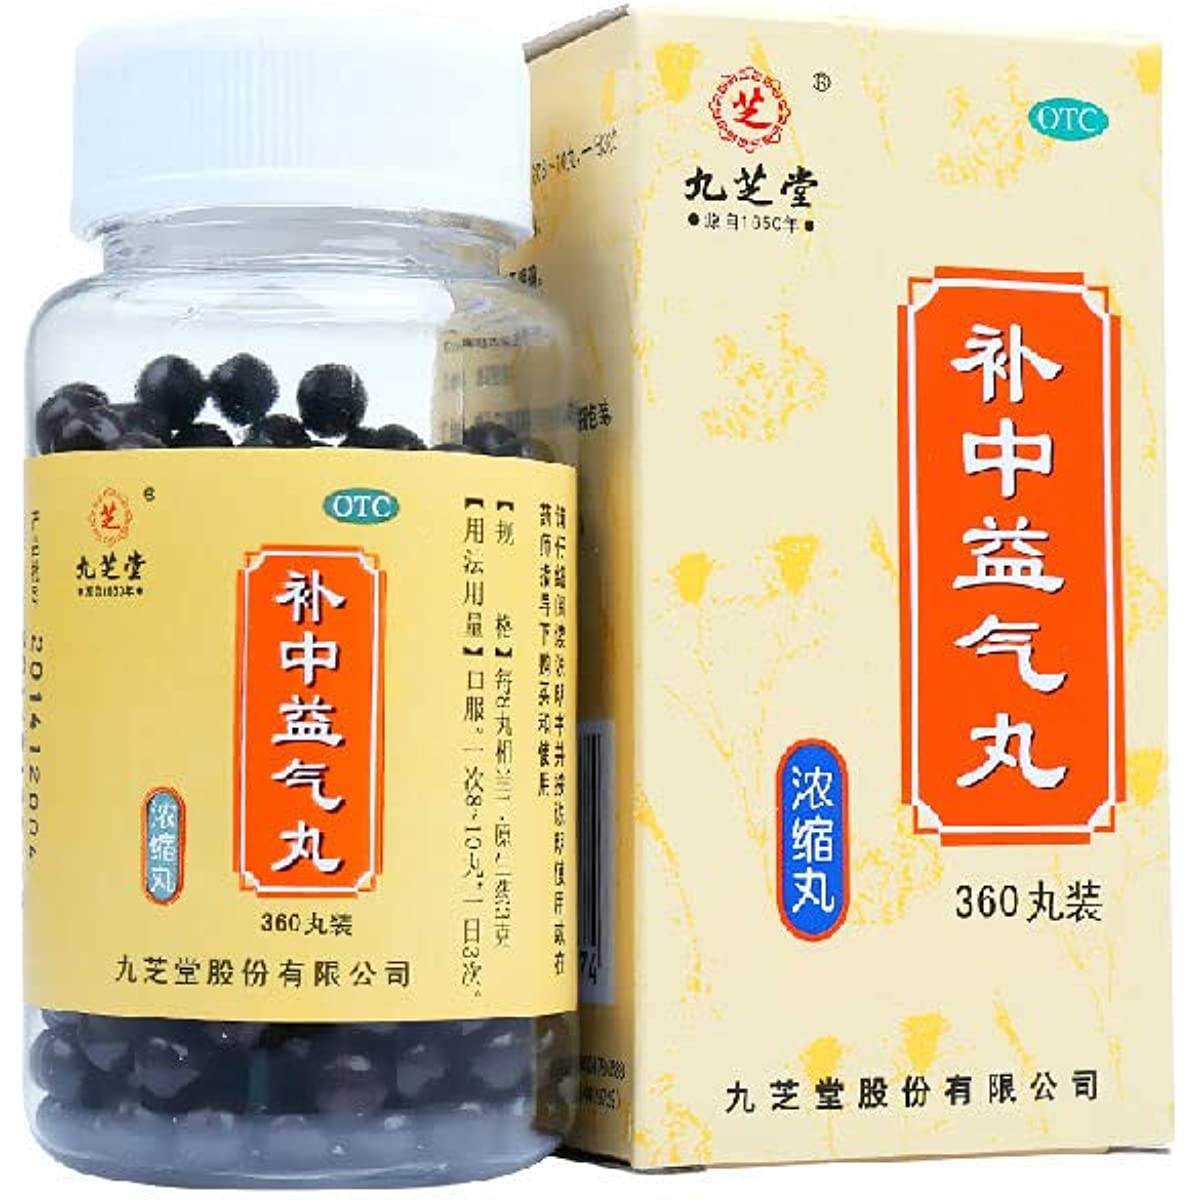 1 Box, Buzhong Yiqi Wan 360 Pills / Box  补中益气丸